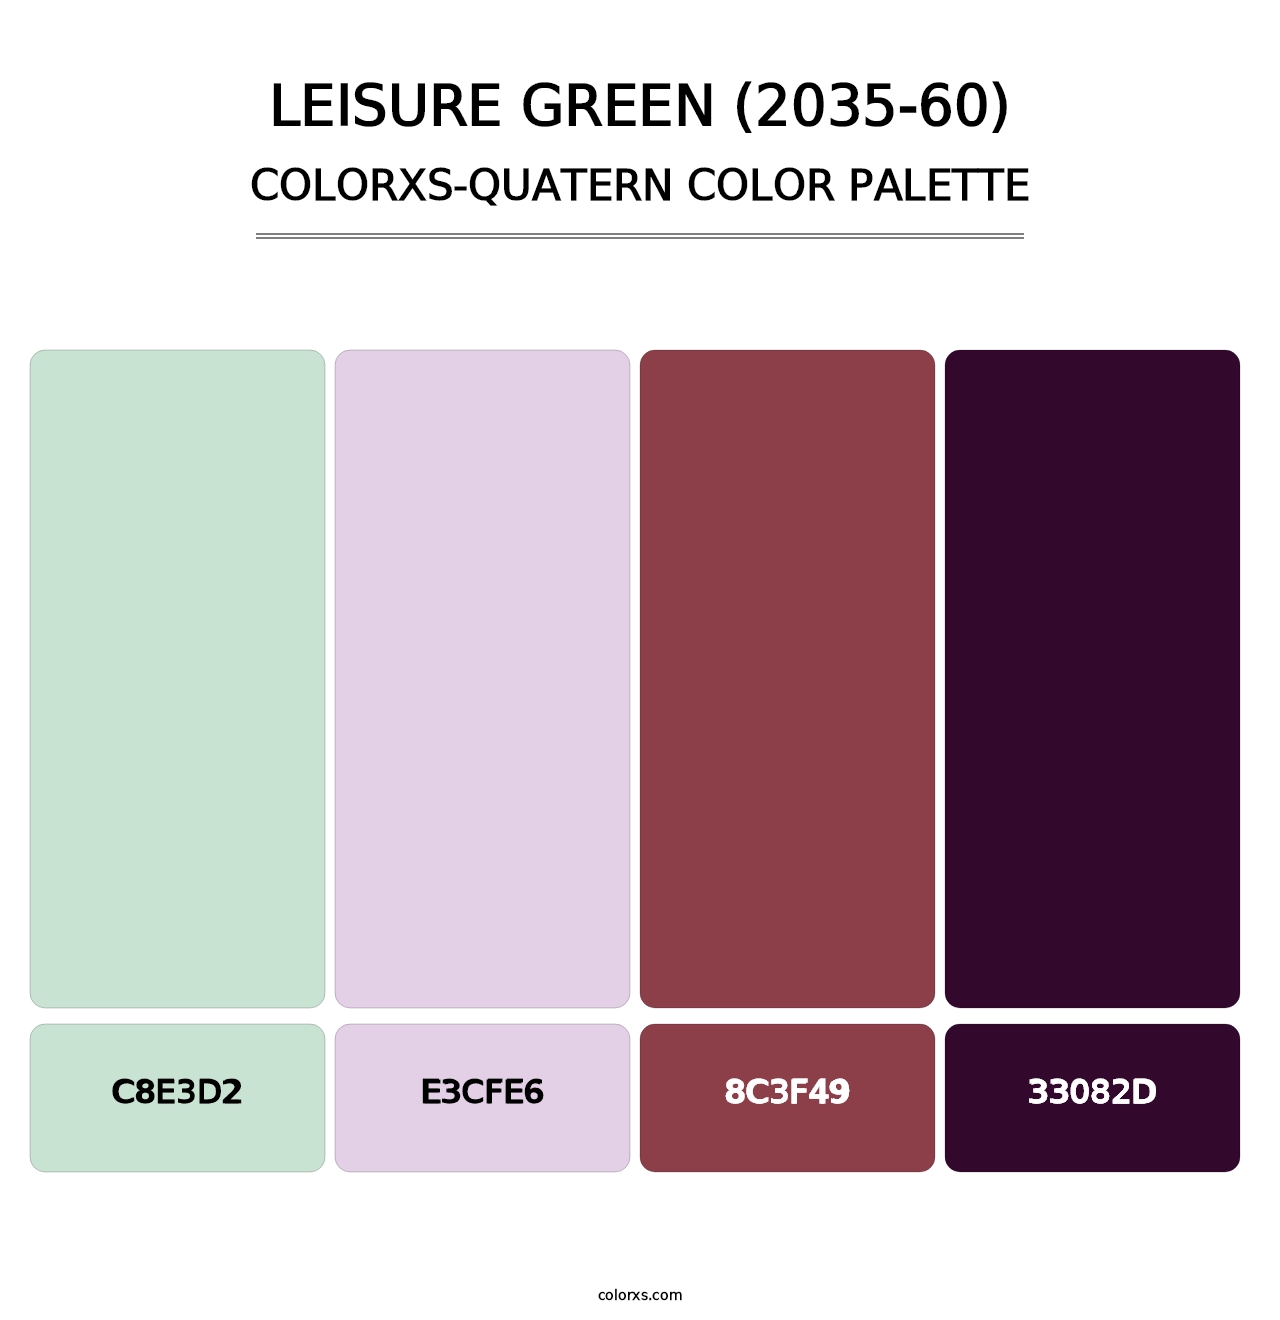 Leisure Green (2035-60) - Colorxs Quatern Palette